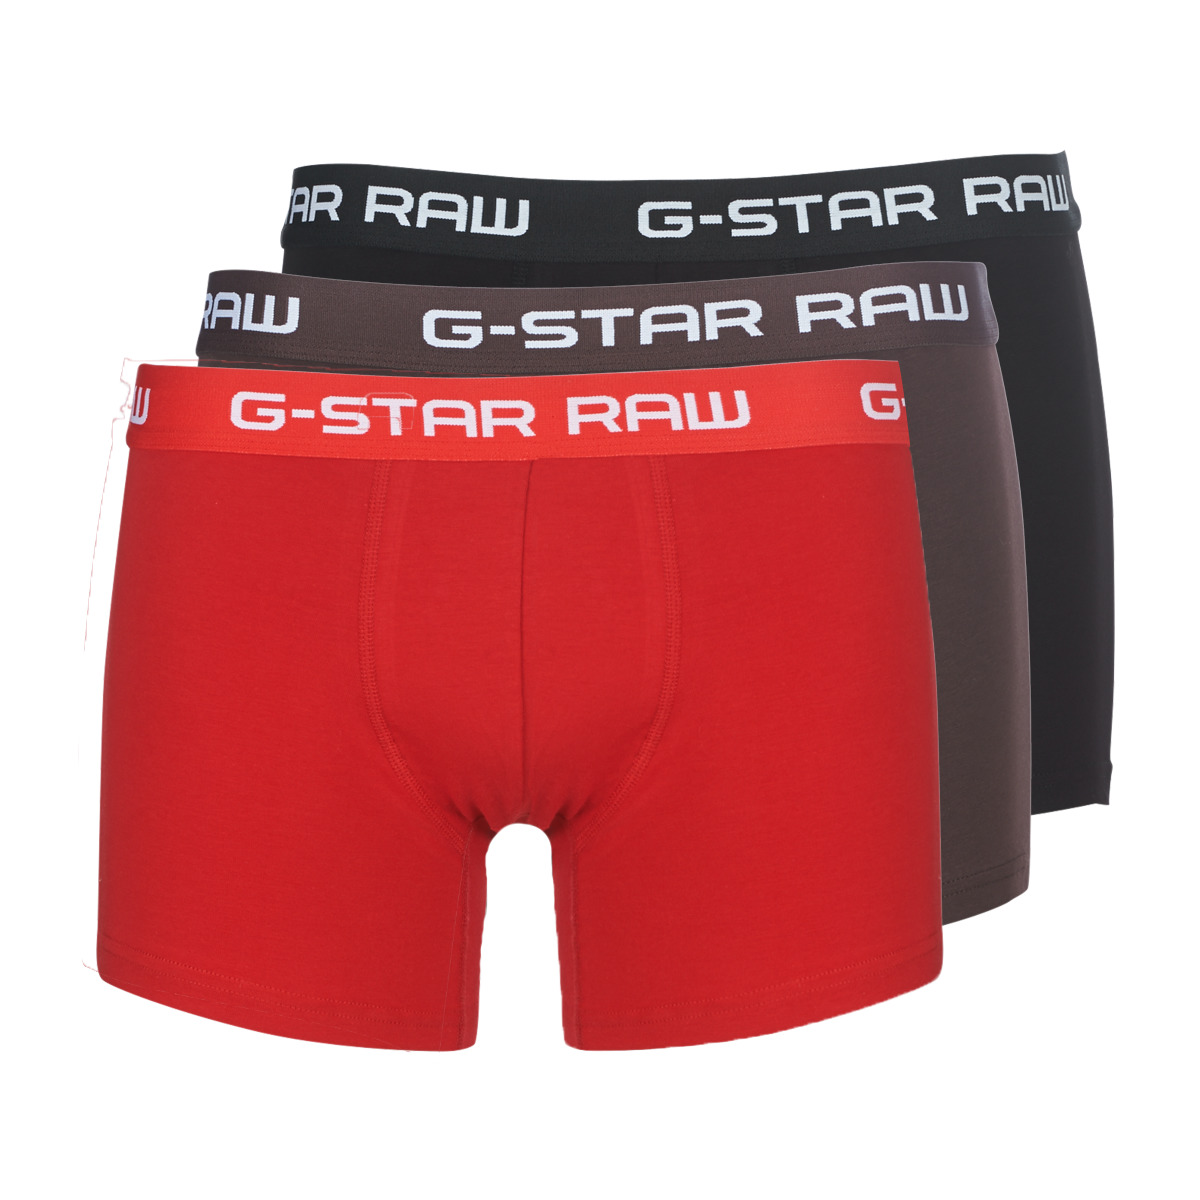 G-Star Raw Noir / Rouge / Marron CLASSIC TRUNK CLR 3 PA